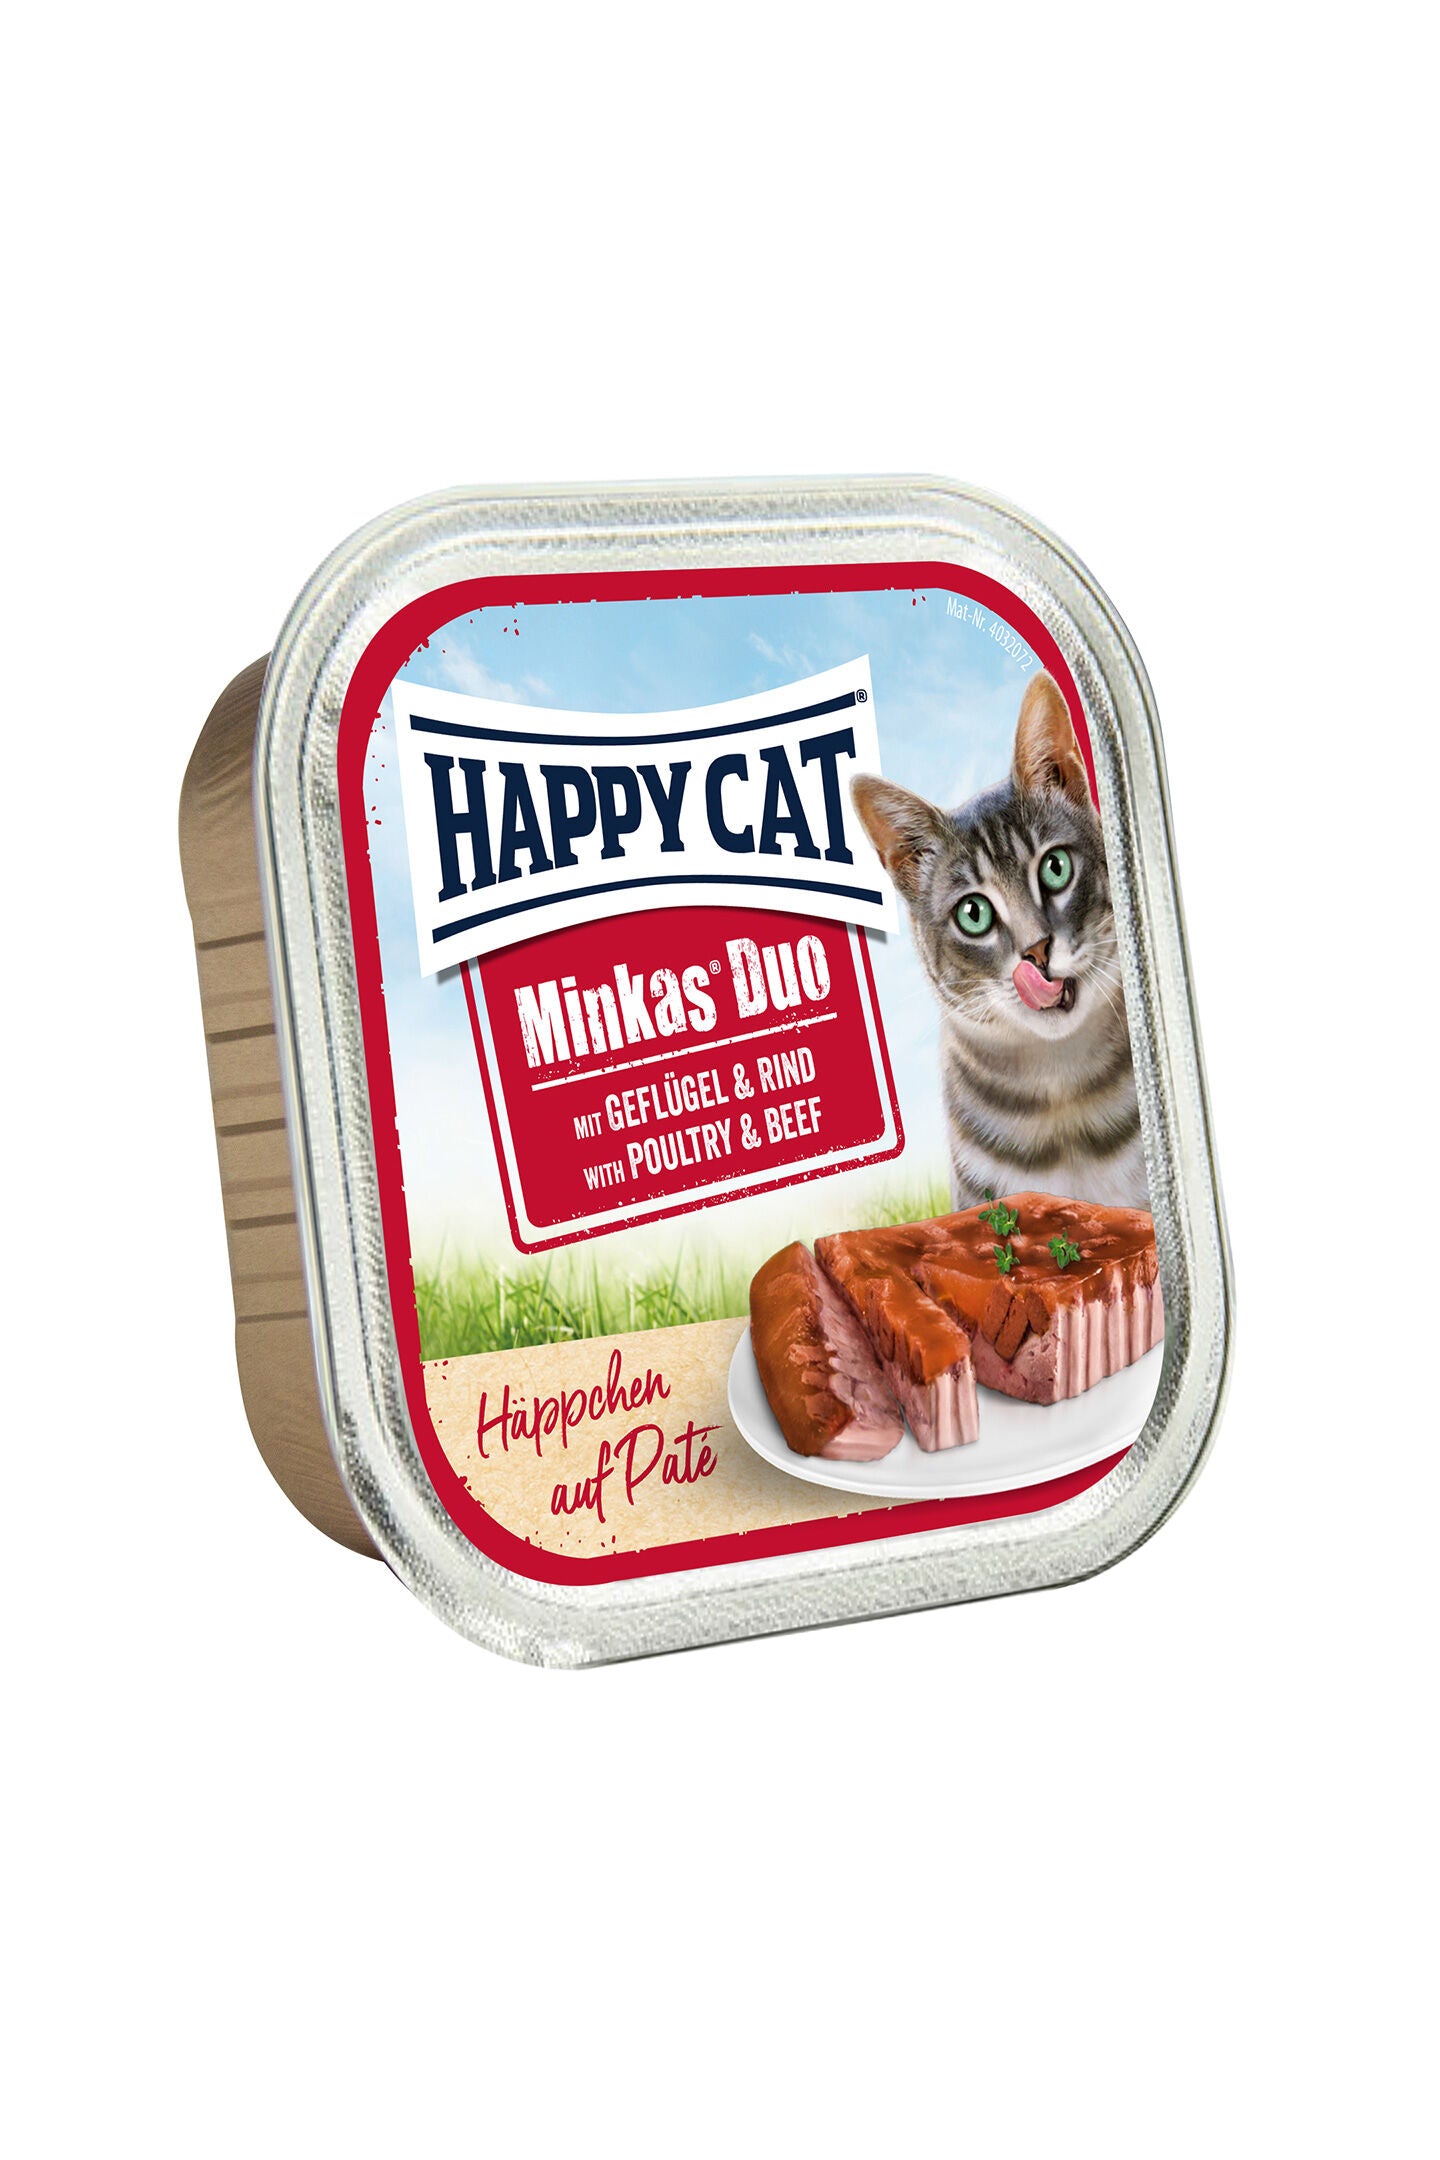 Happy Cat Minkas Duo Poultry & Beef (Min Order 0,1 - 12pcs)